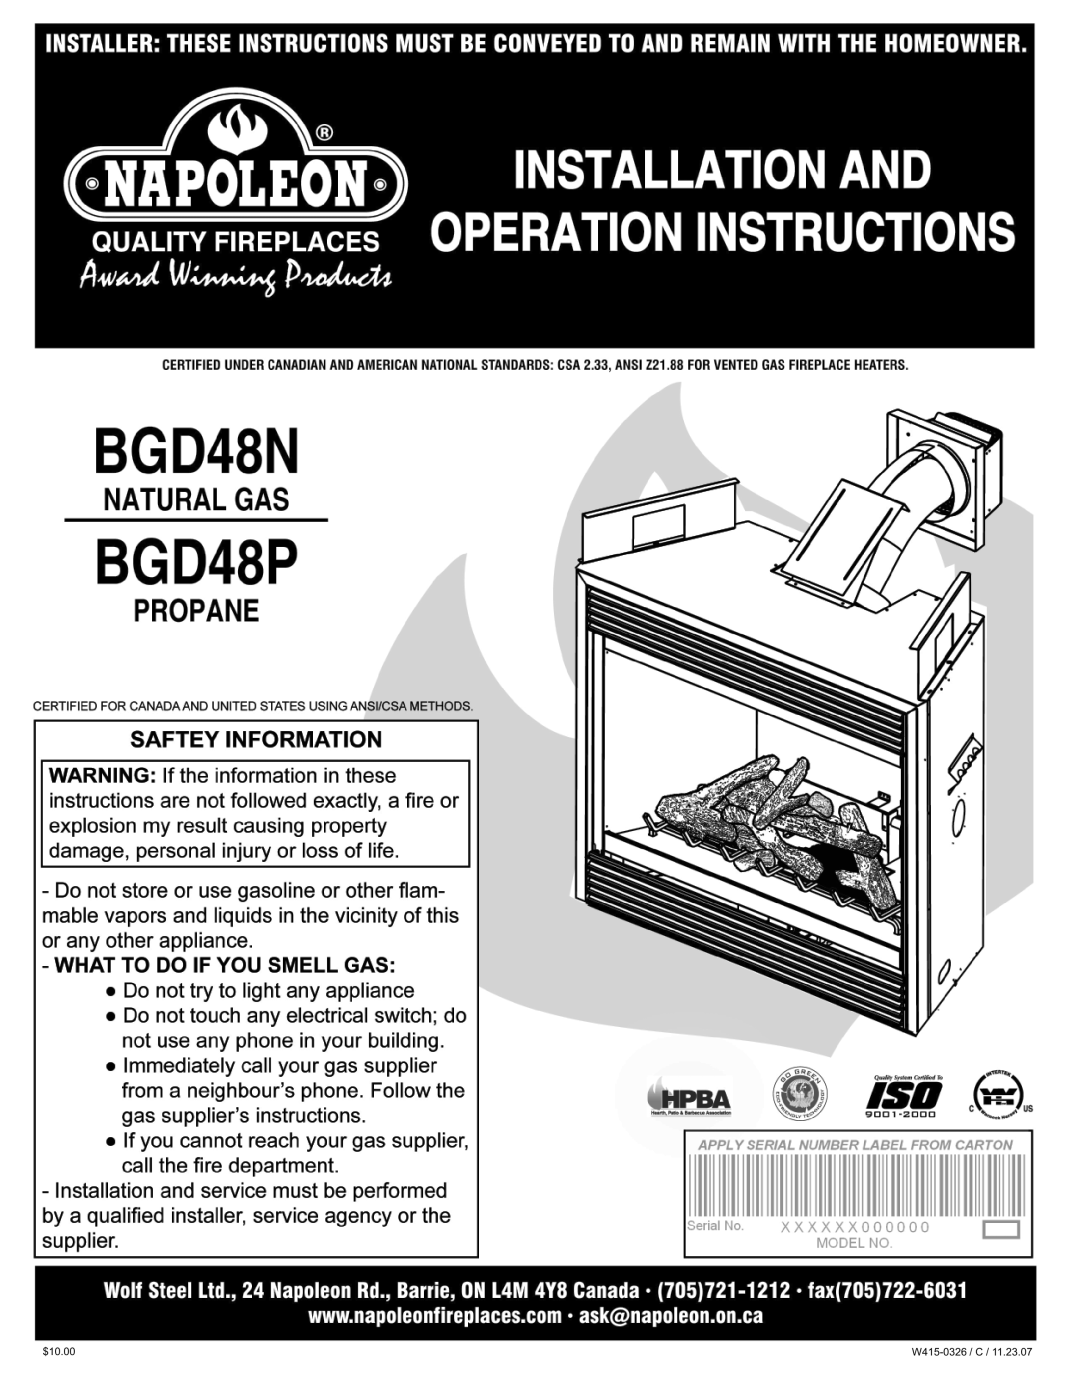 Napoleon Fireplaces BGD48P, BGD48N manual W415-0326 /C, $10.00 